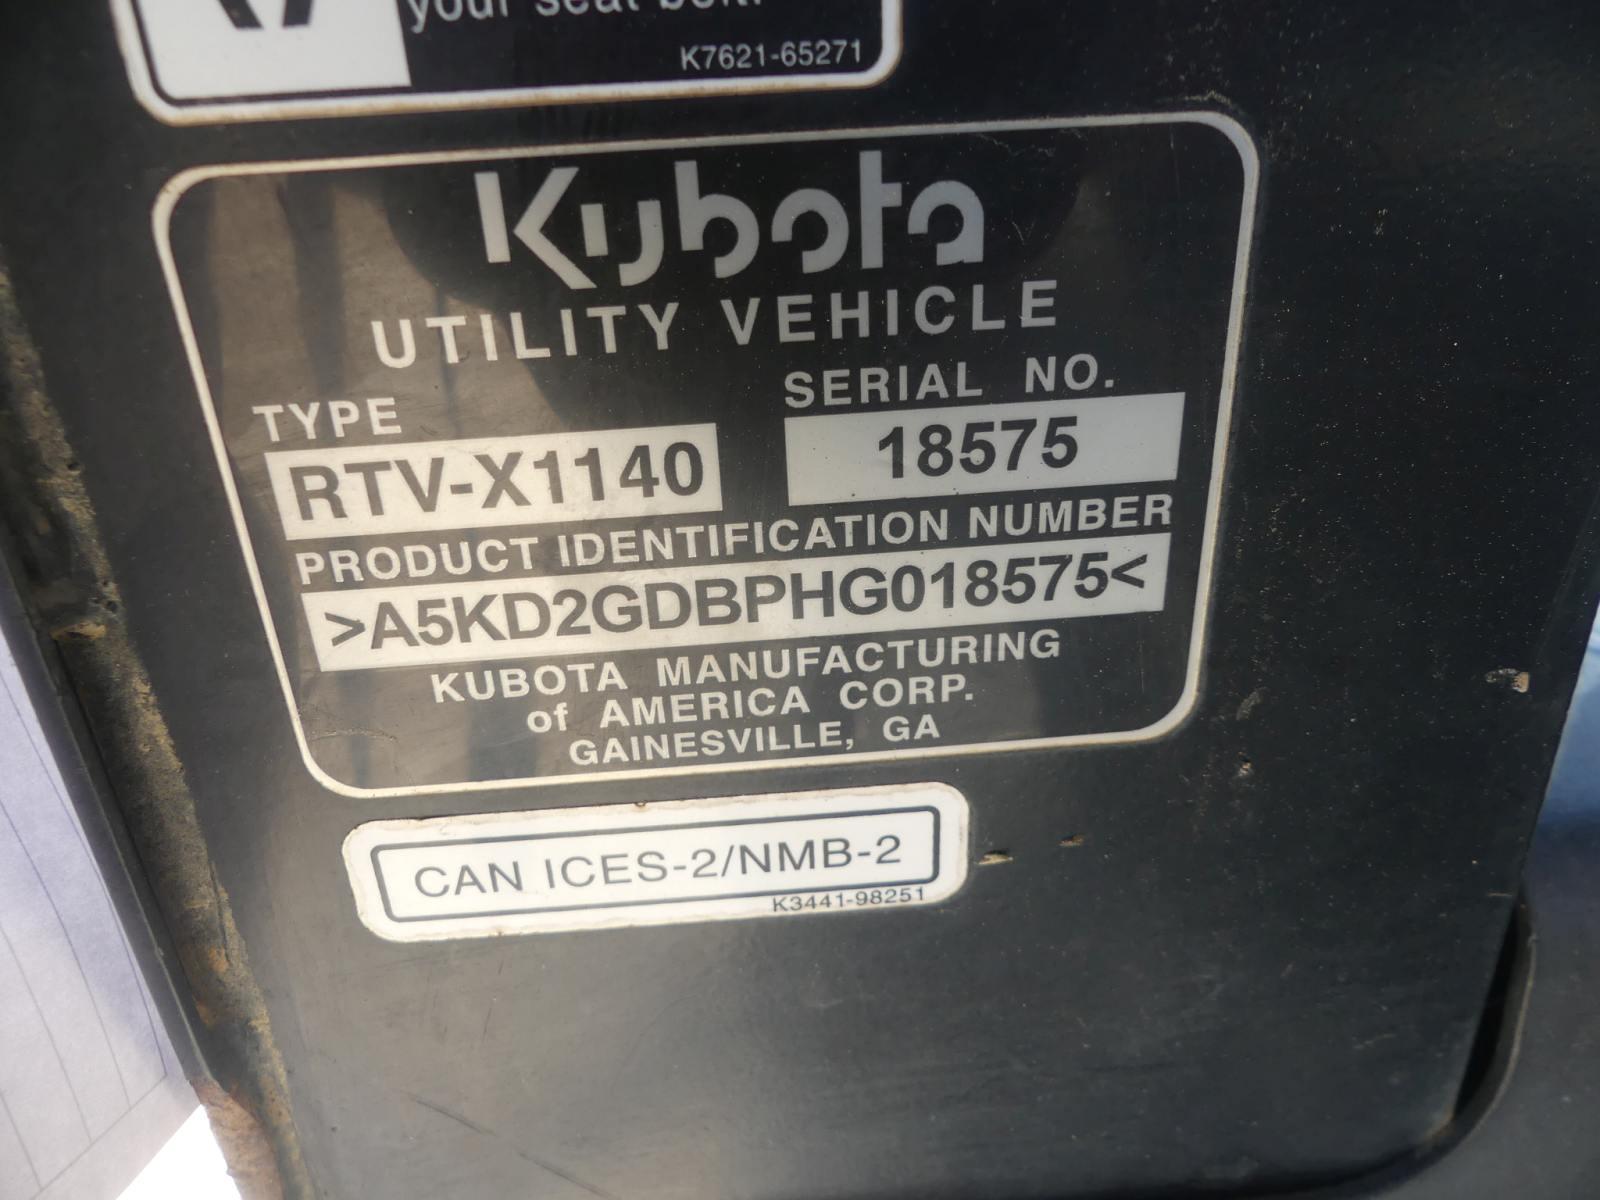 2017 Kubota RTV-X1140 Utility Vehicle, s/n 185751 (No Title - $50 Trauma Ca